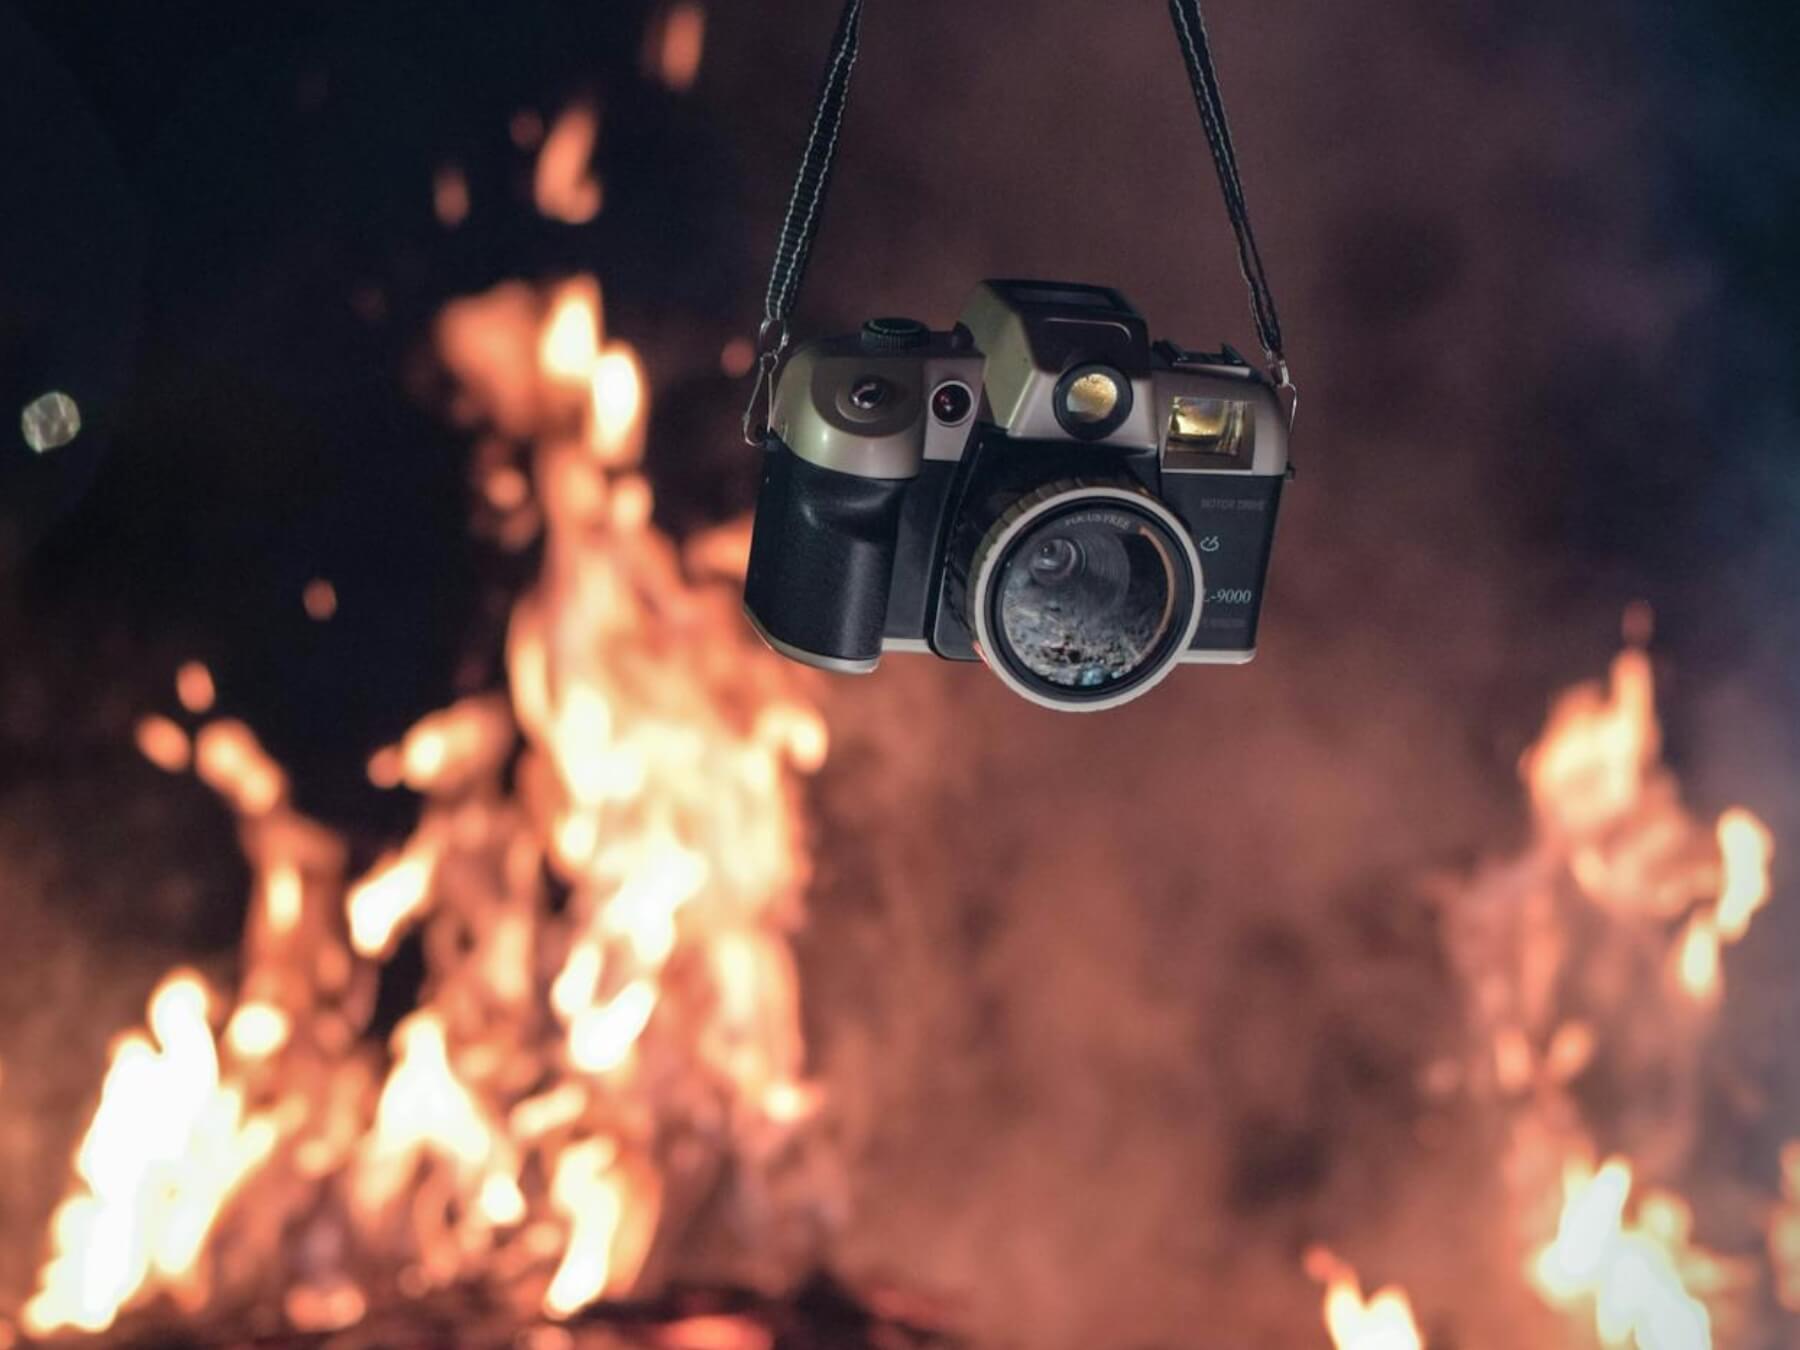 analog camera held near fire